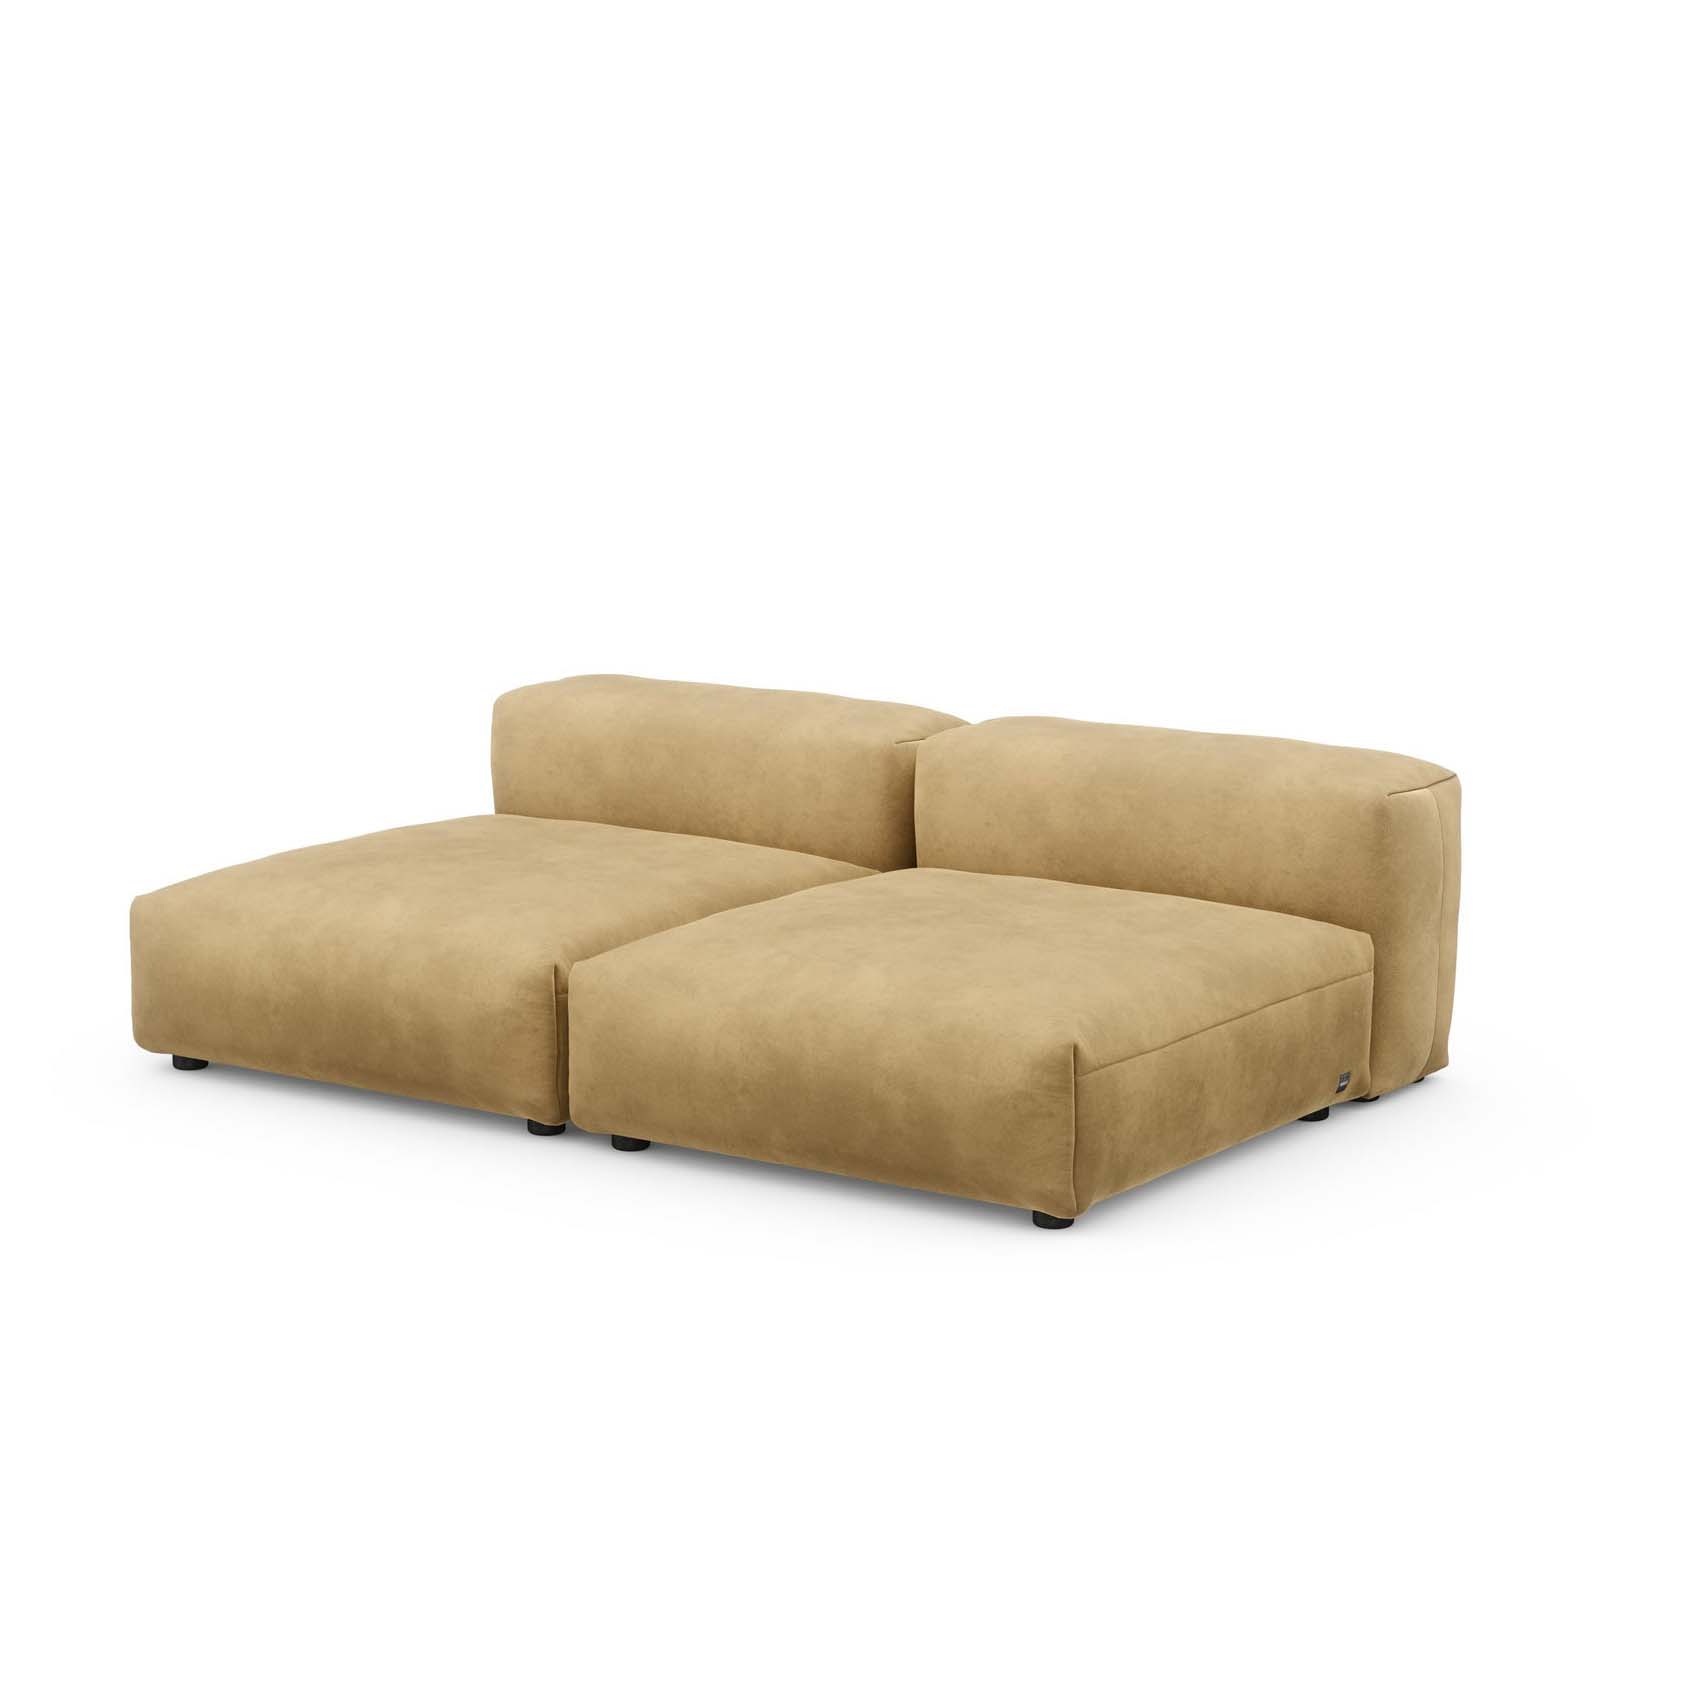 Two Seat Lounge Sofa L Velvet Caramel